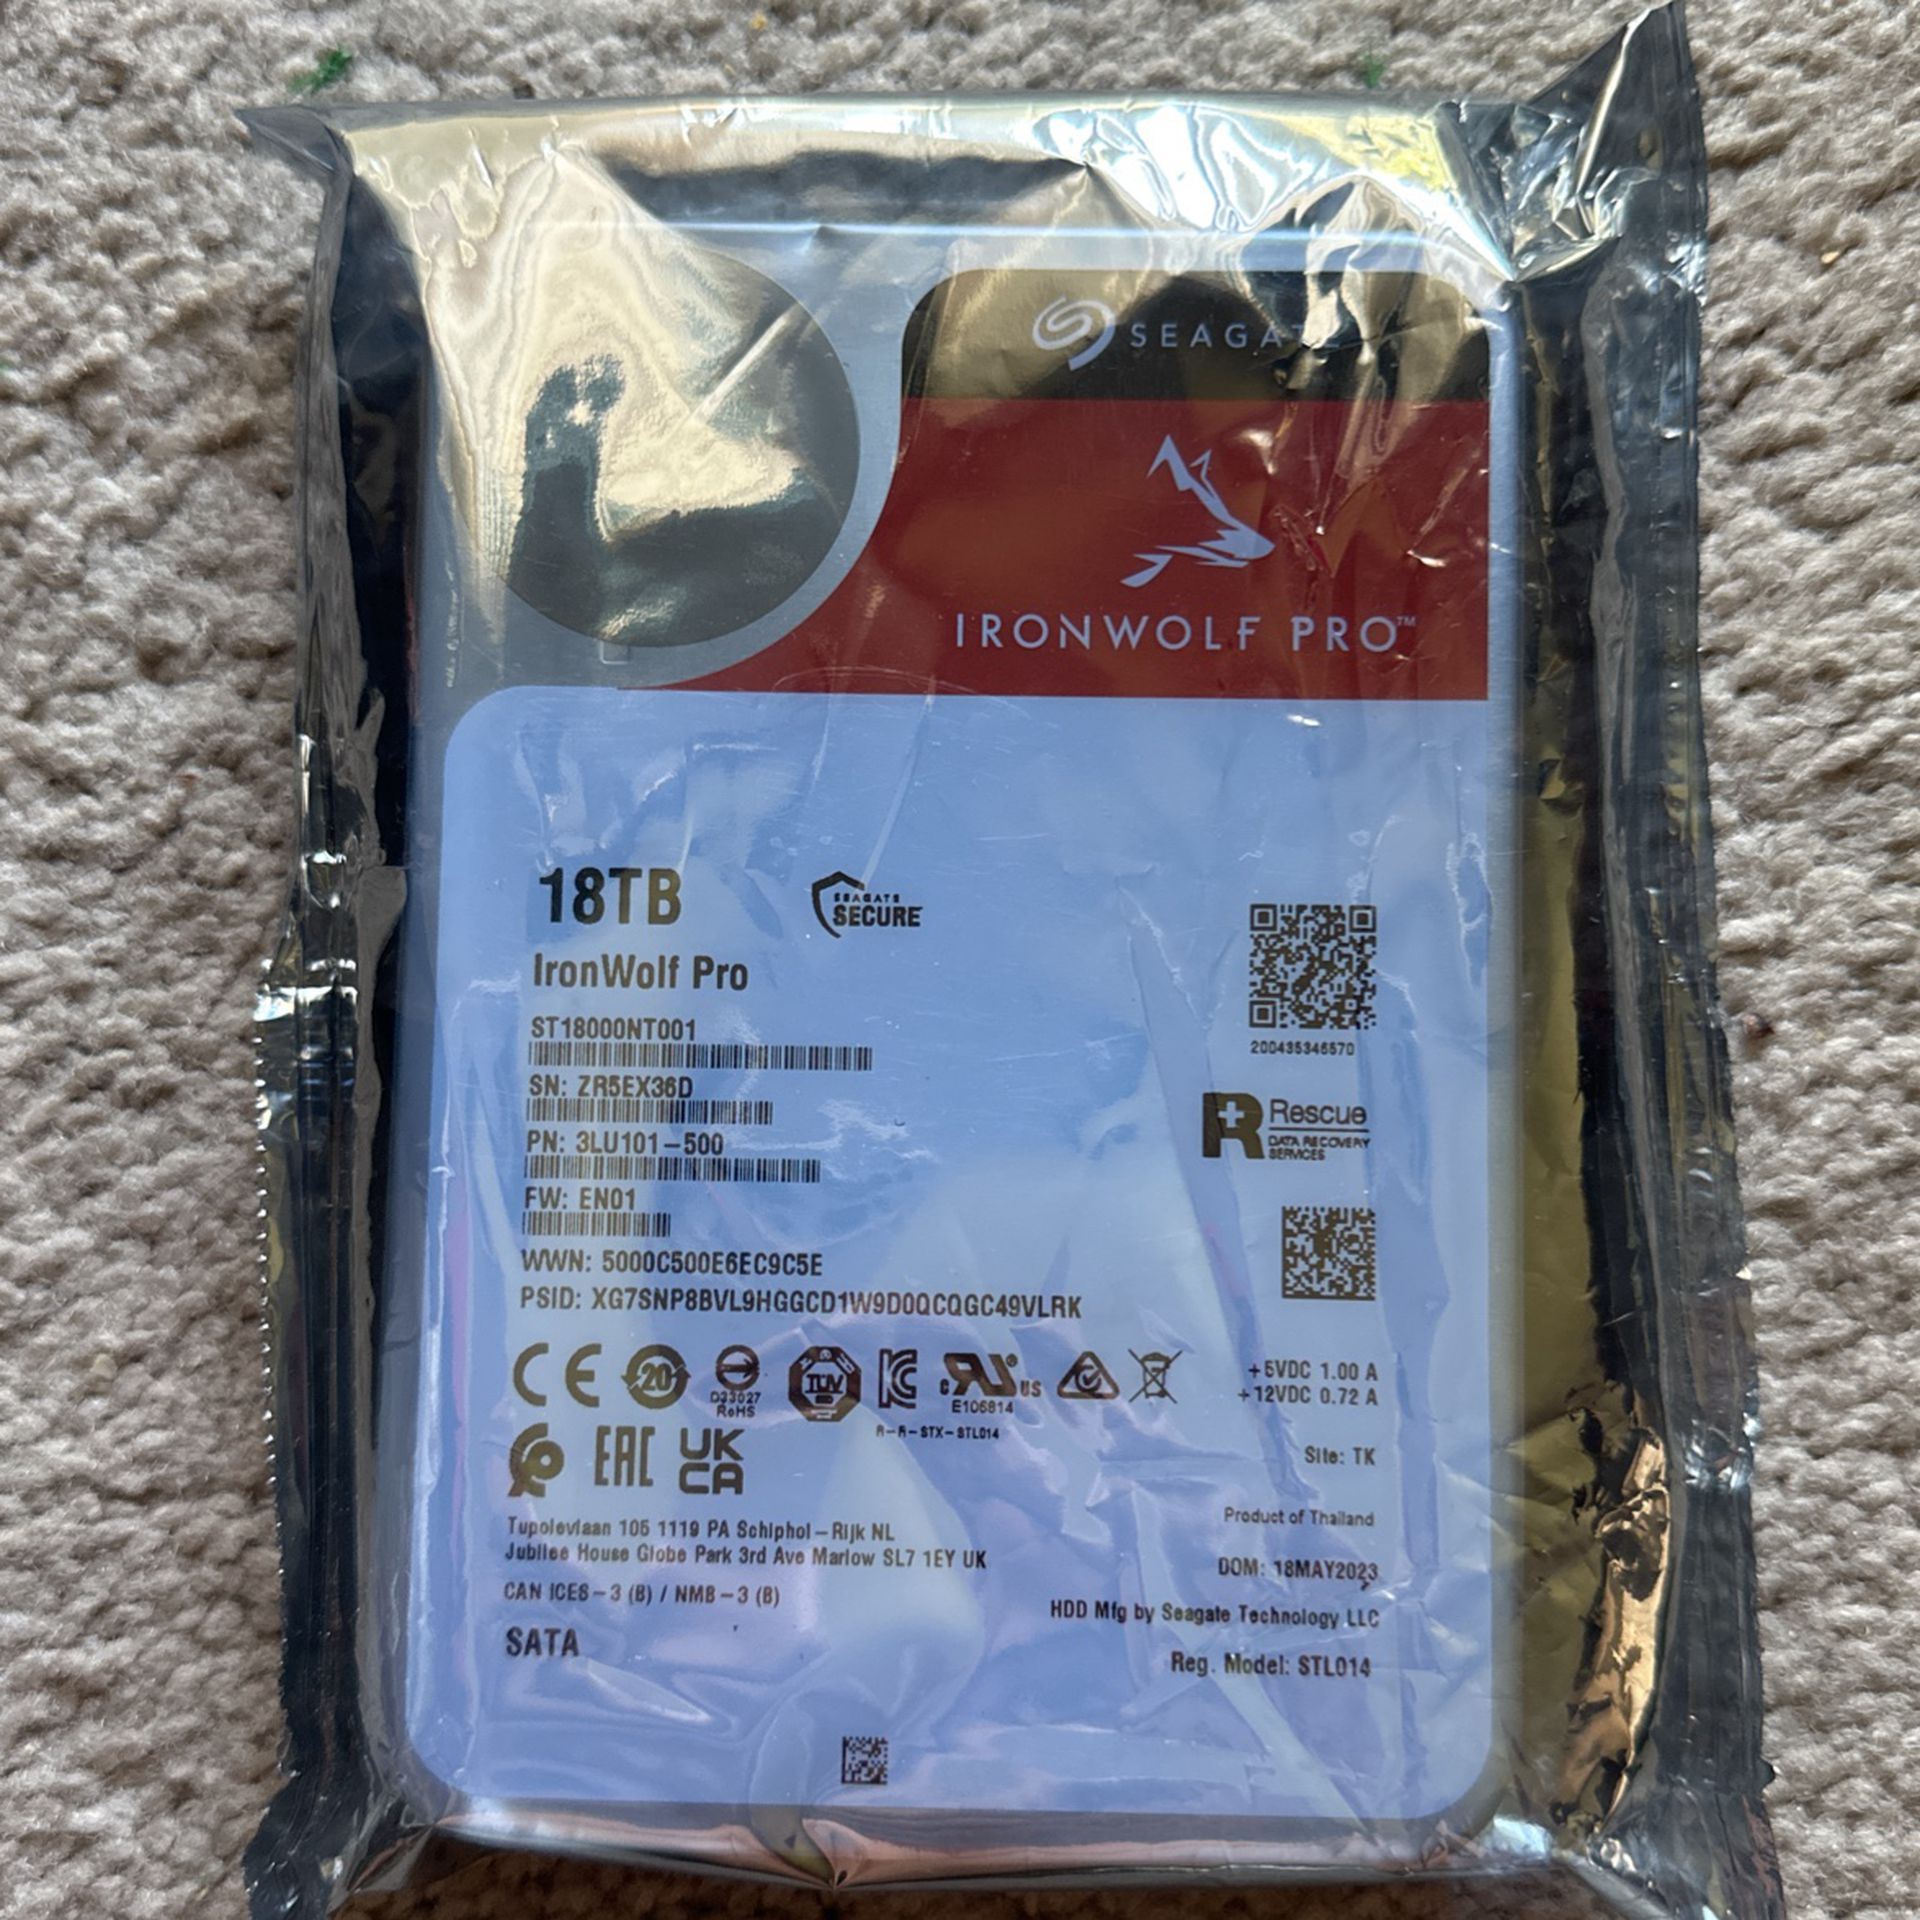 Seagate 18 TB hard drive Iron Wolf Pro sealed bag